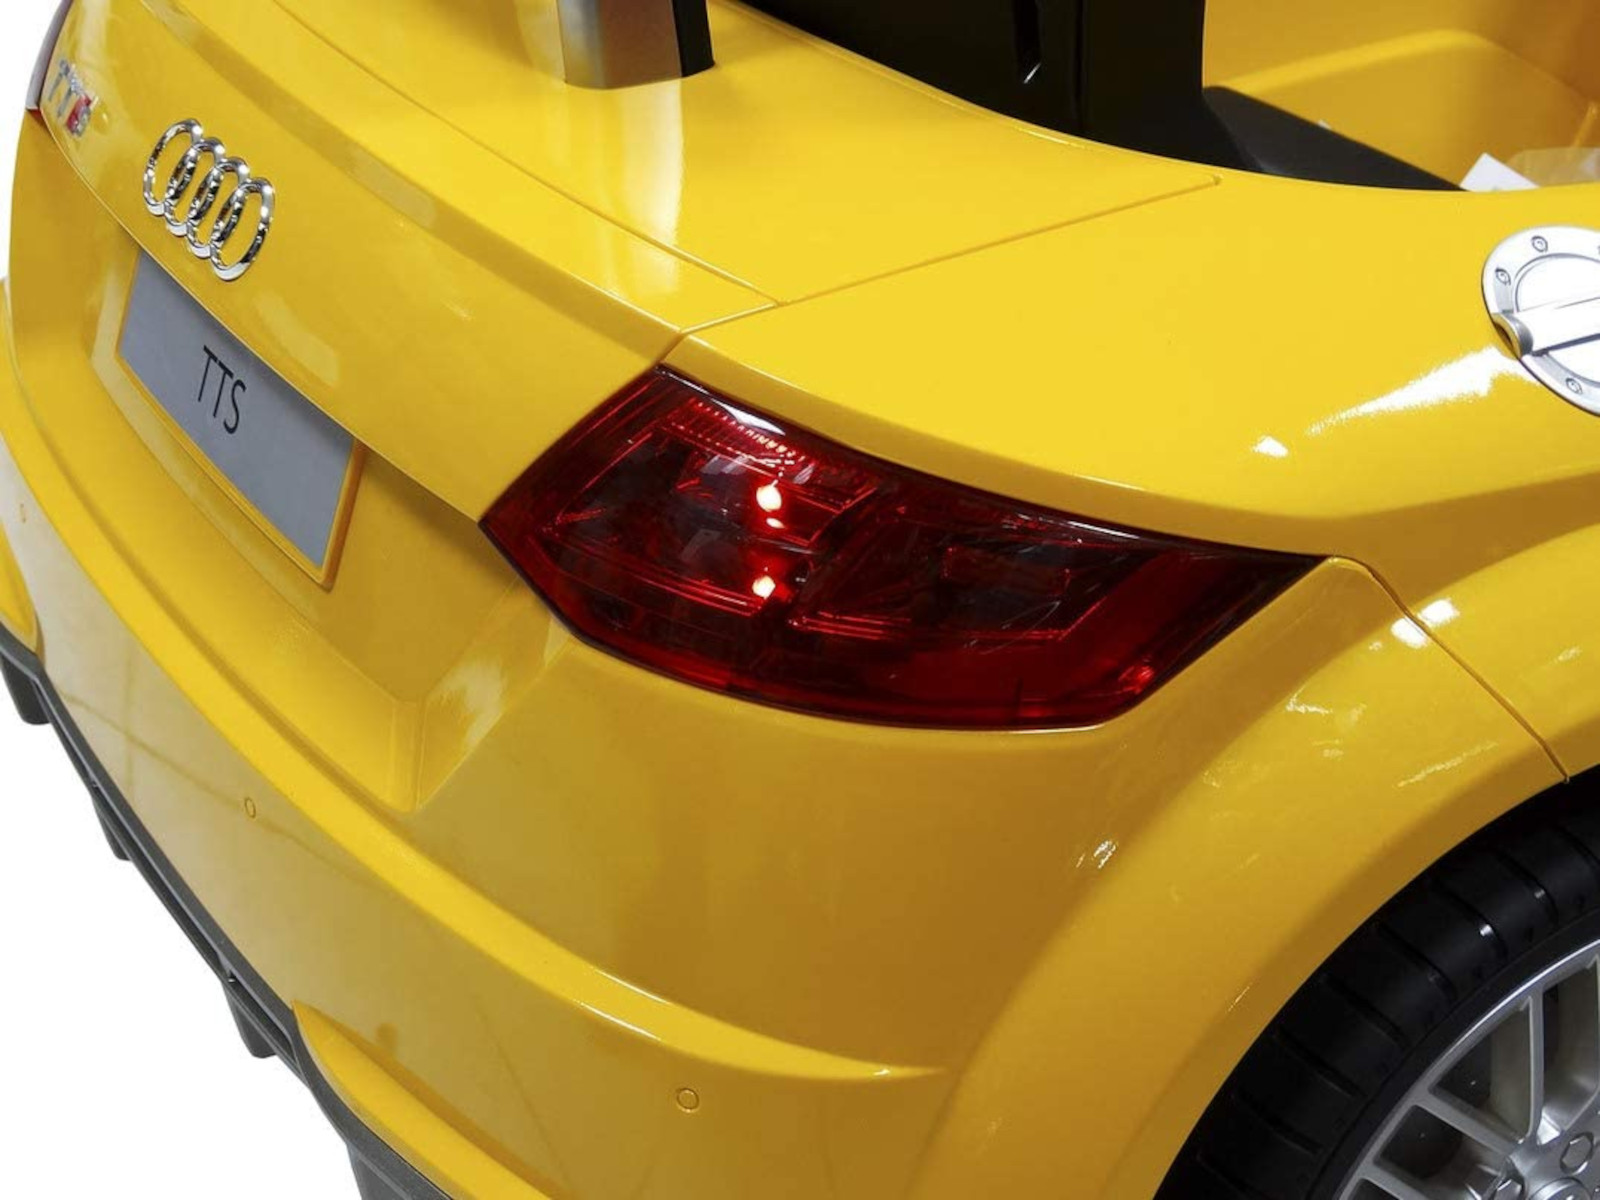 RASTAR Ride-On für Audi TTS Roadster Elektroauto (gelb) - Spielzeugfahrzeug Kinder